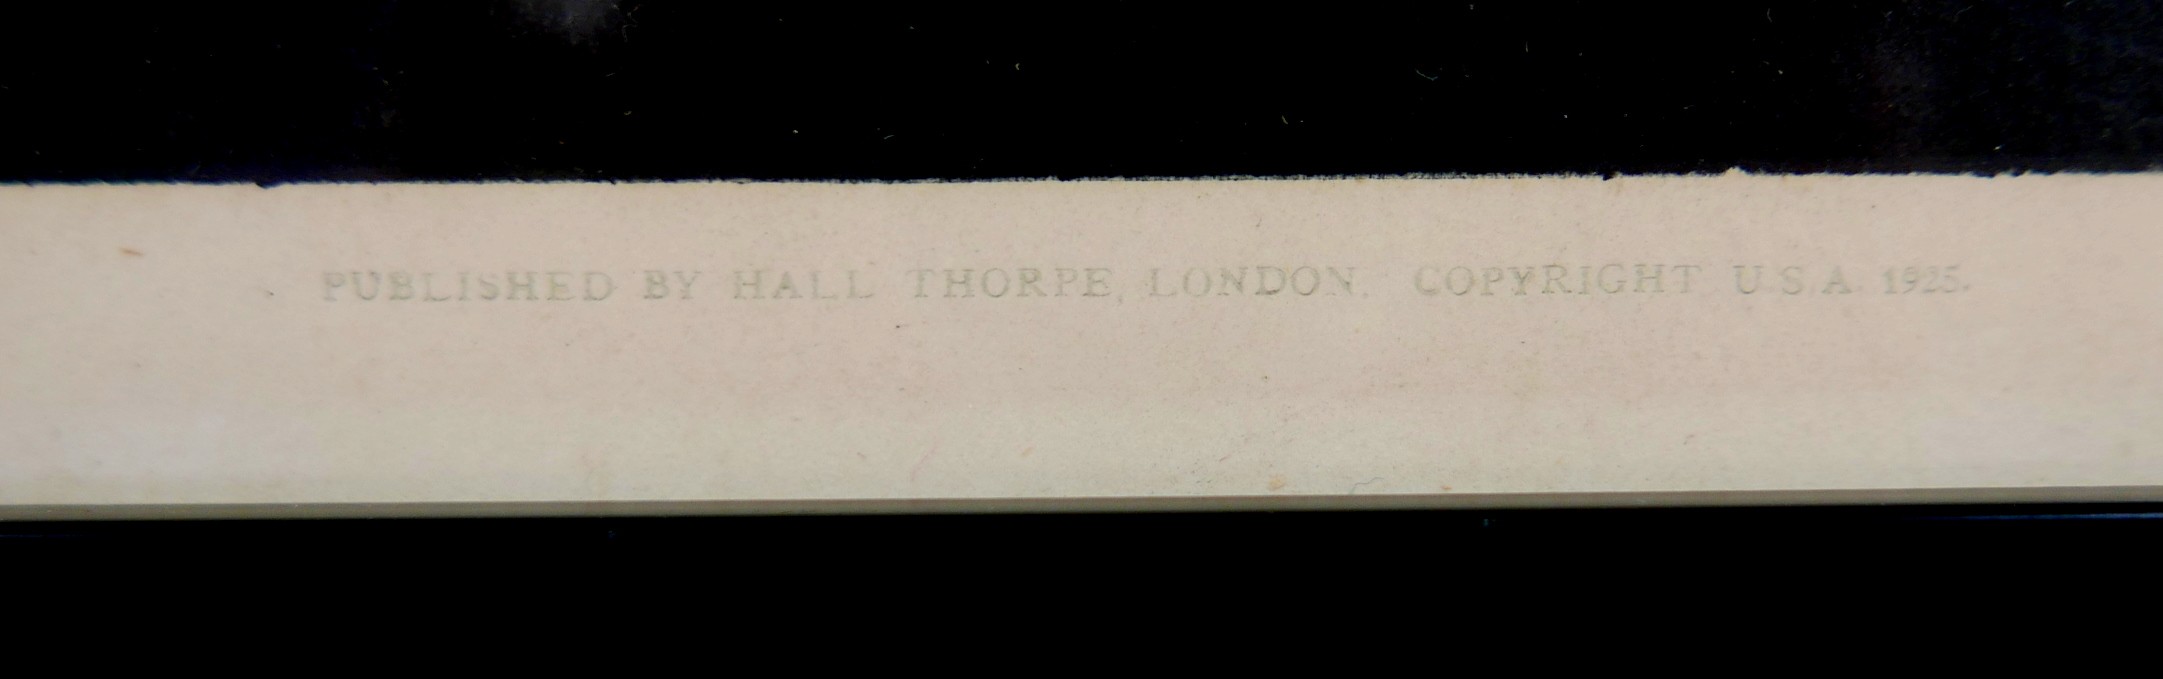 John Hall Thorpe (Australian, 1874-1947): 'Marigolds', signed in pencil lower right margin, - Image 5 of 14